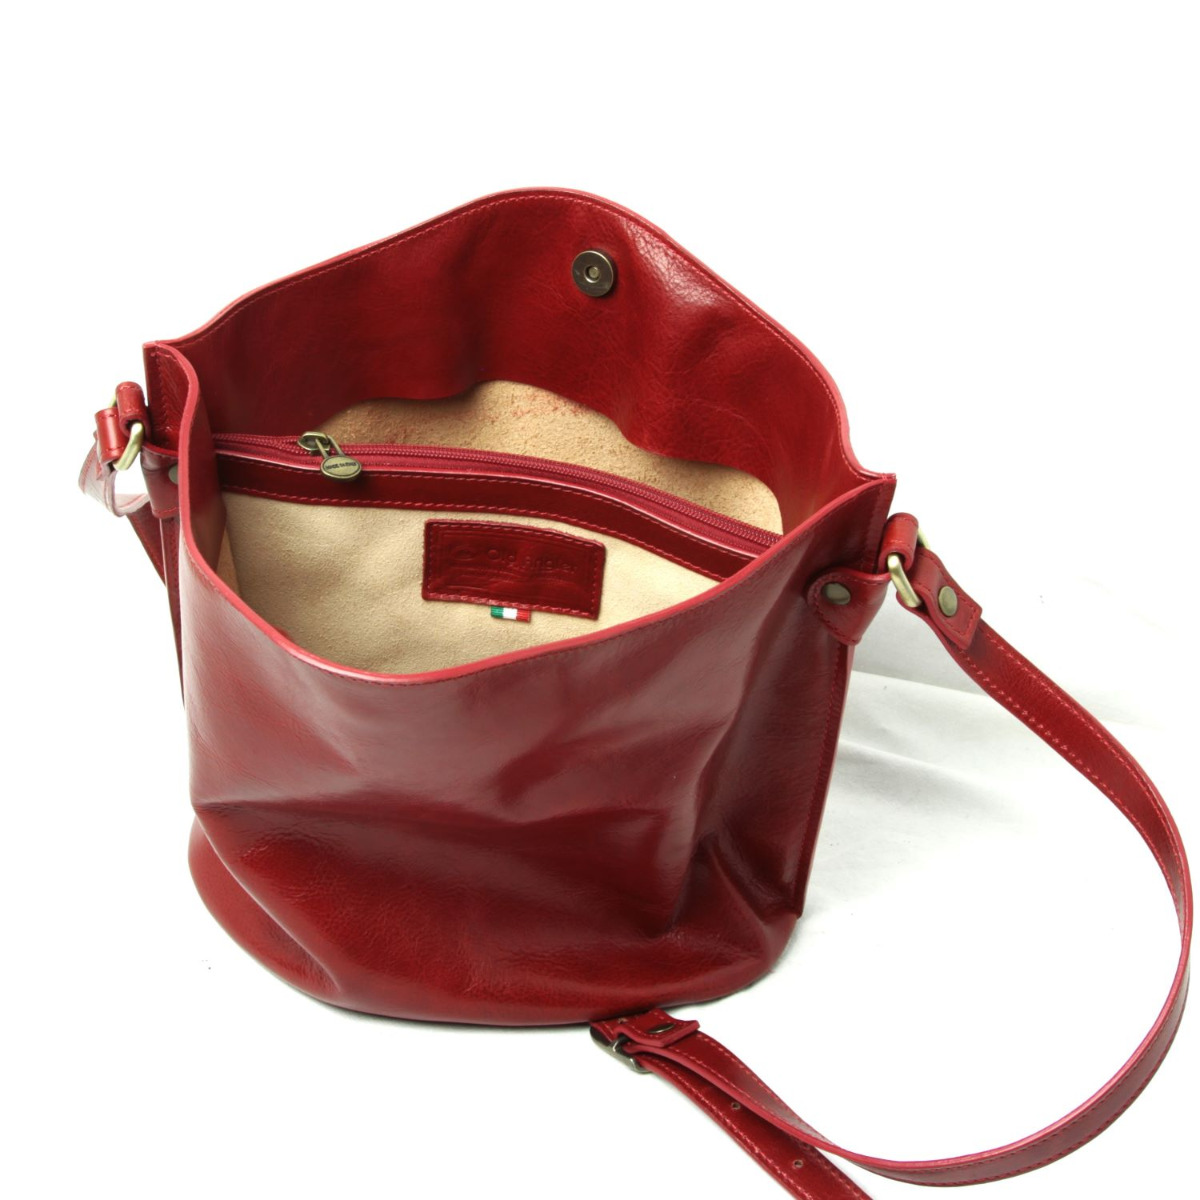 Full grain leather shoulder bag - red|205405RO|Old Angler Firenze